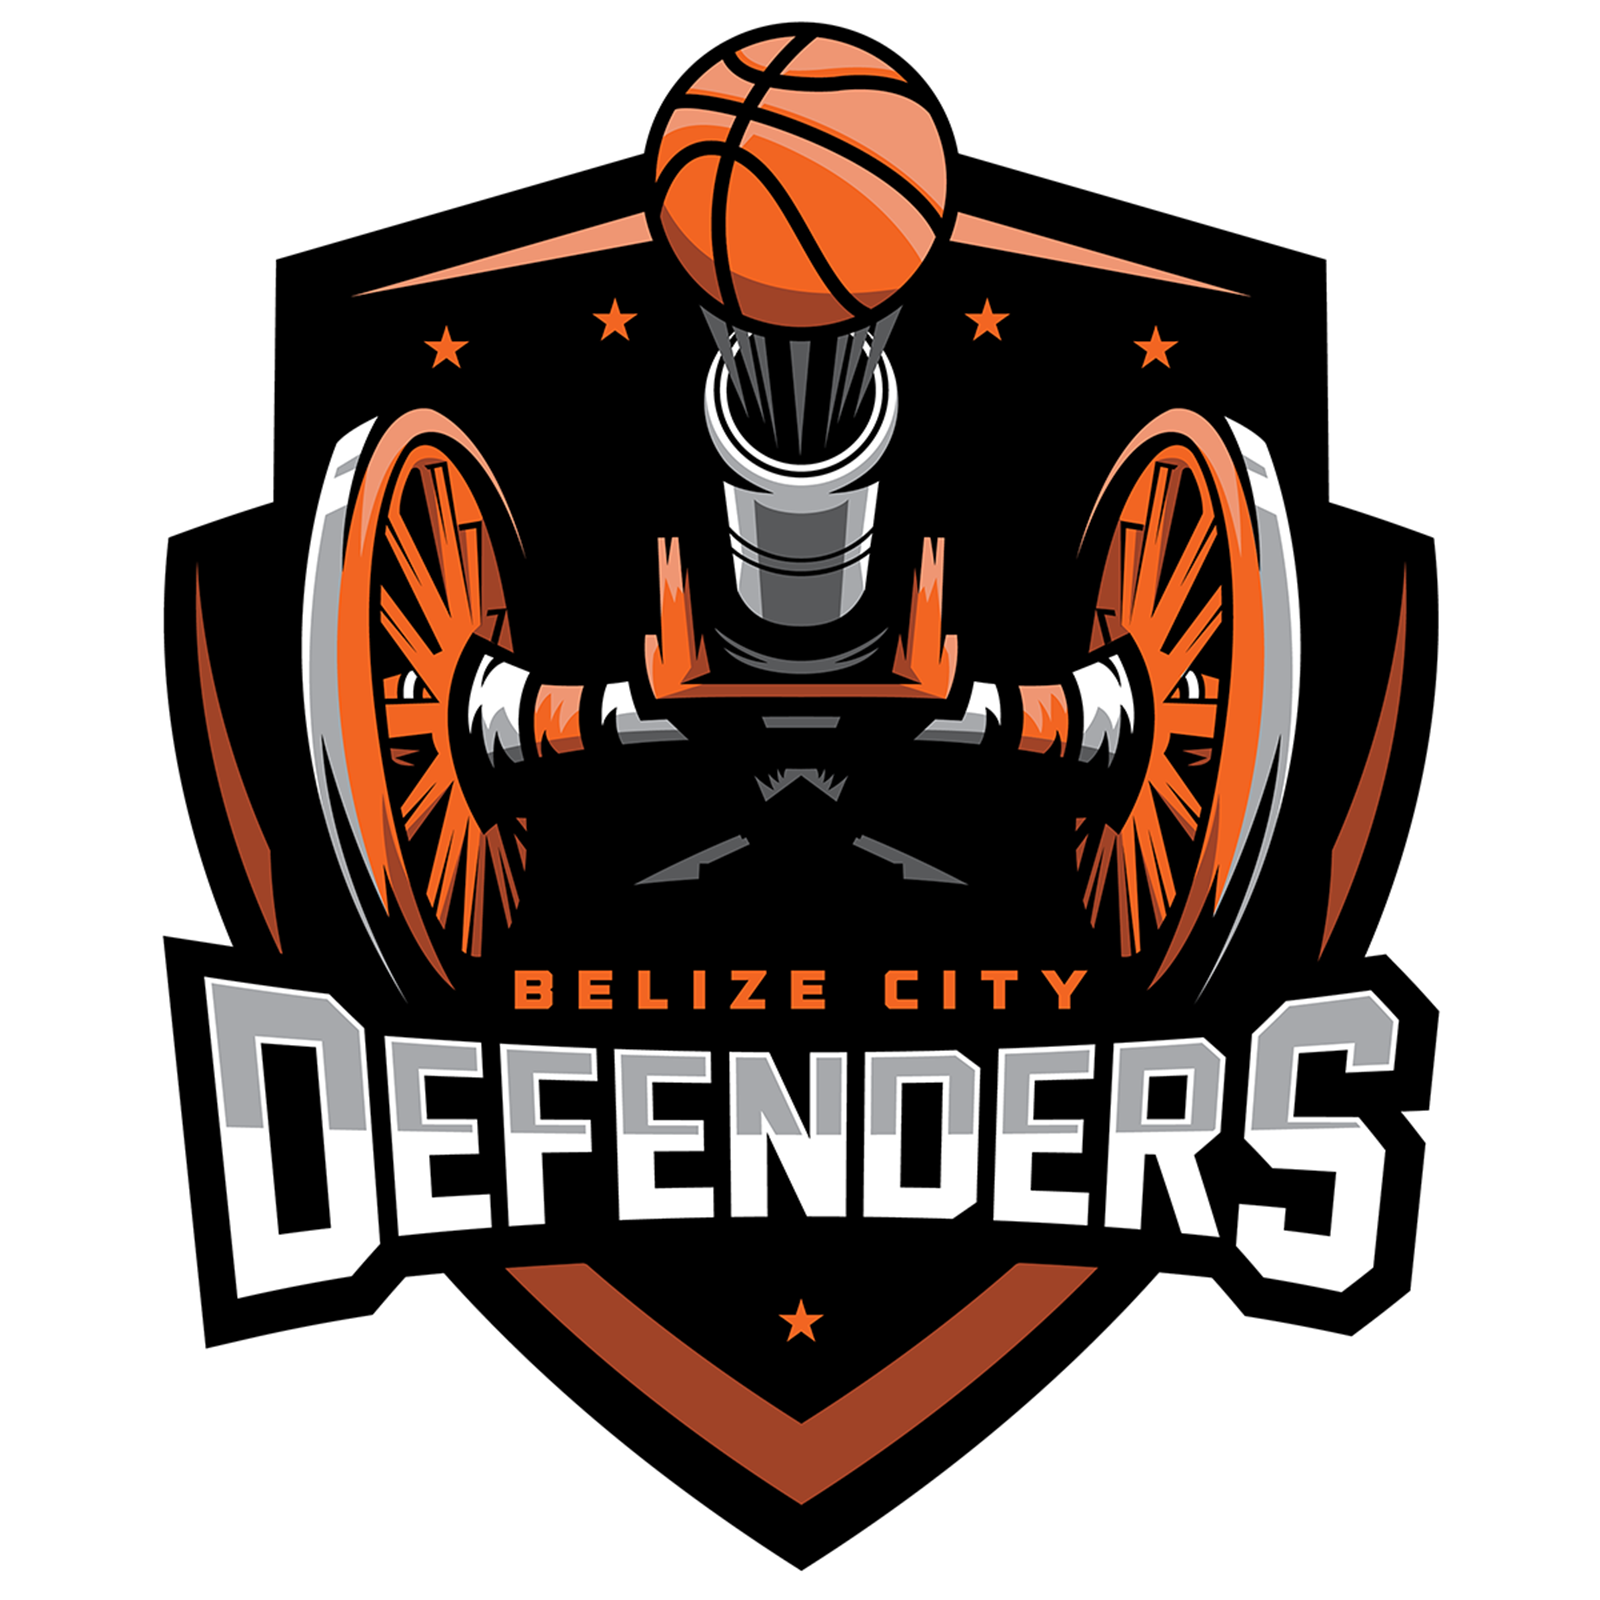 The Belize City Defenders